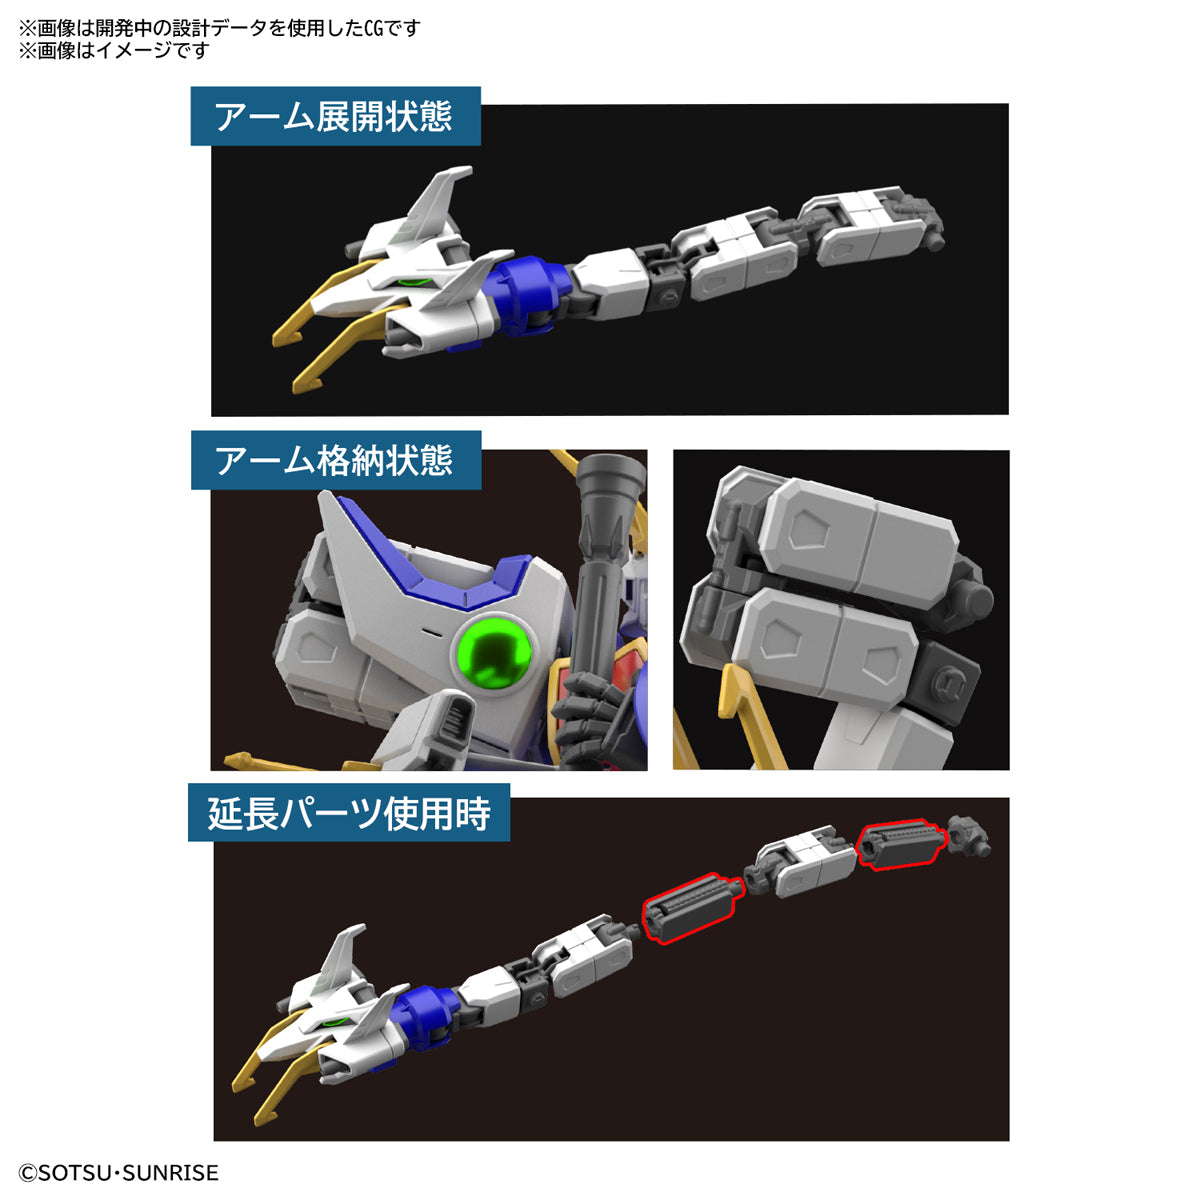 HGAC - XXXG-01S Shenlong Gundam